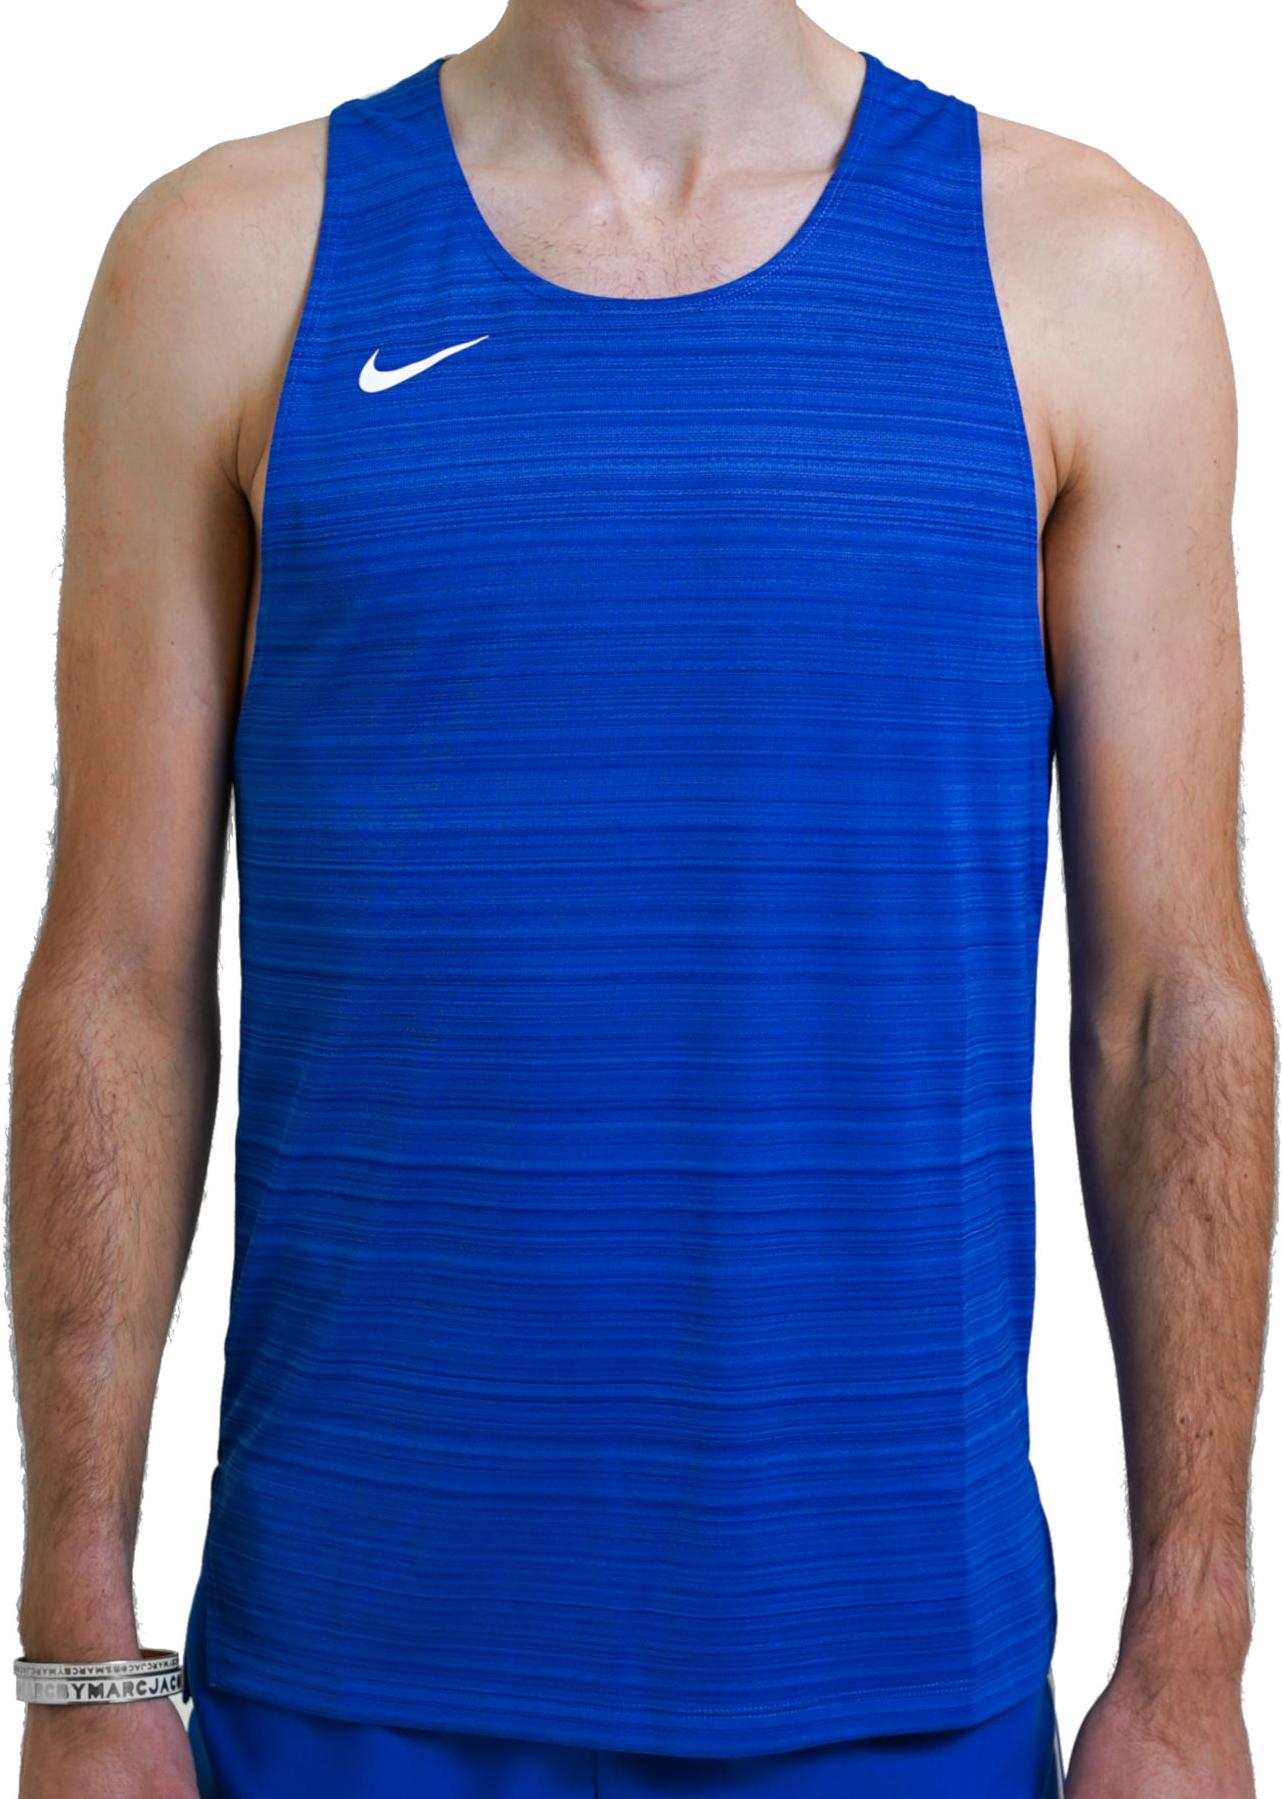 Nike Men's Tank Top - Blue - M